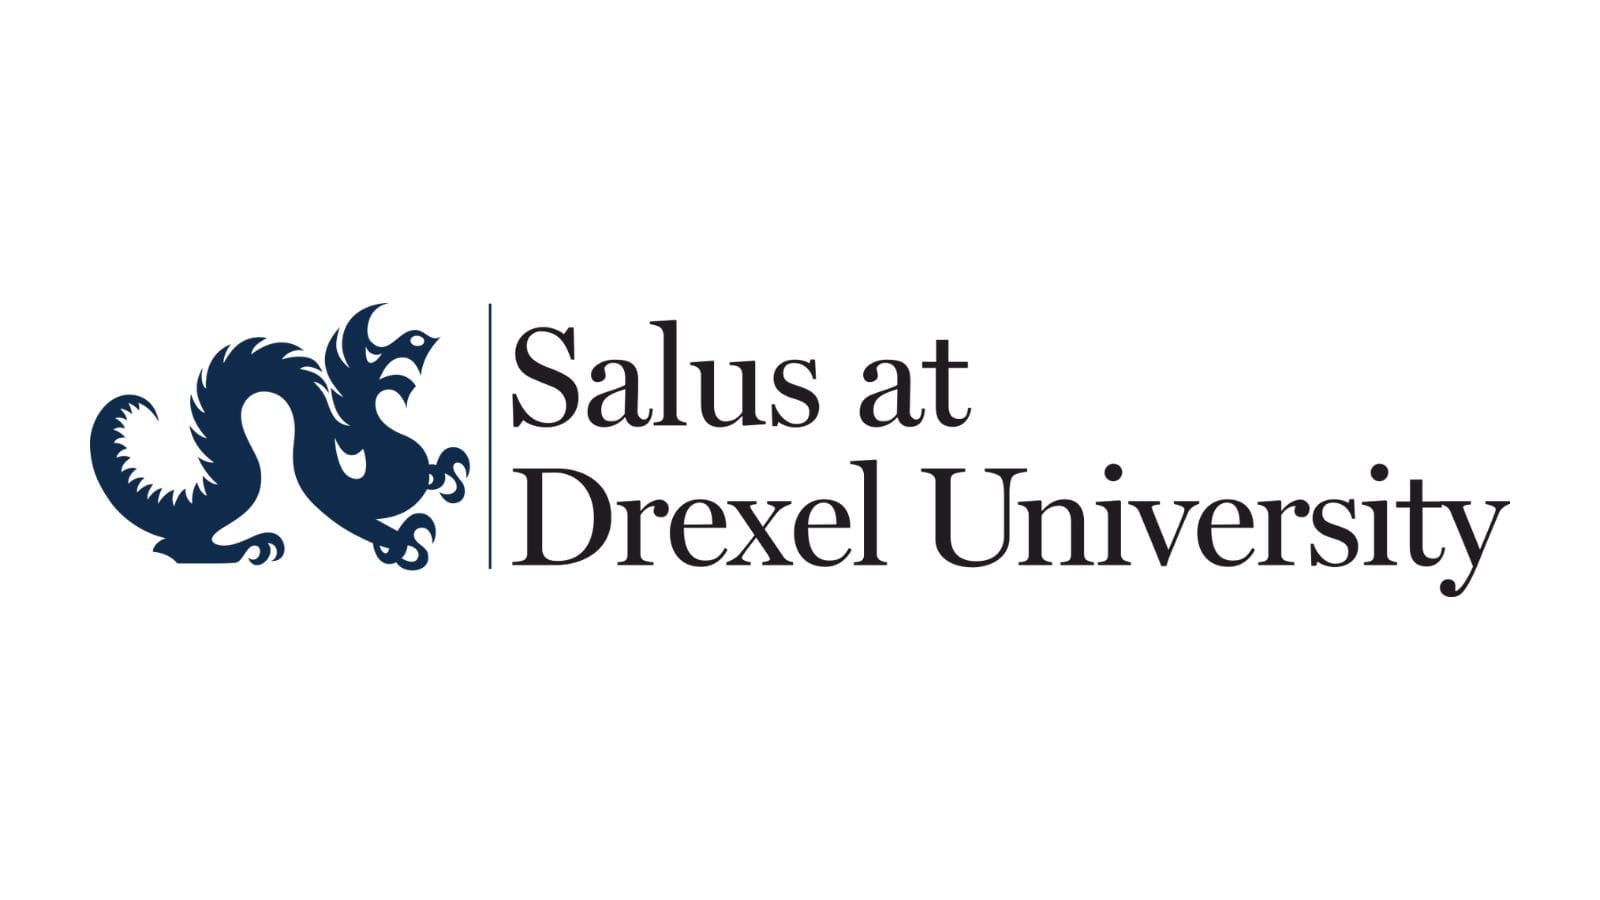 Salas at Drexel University